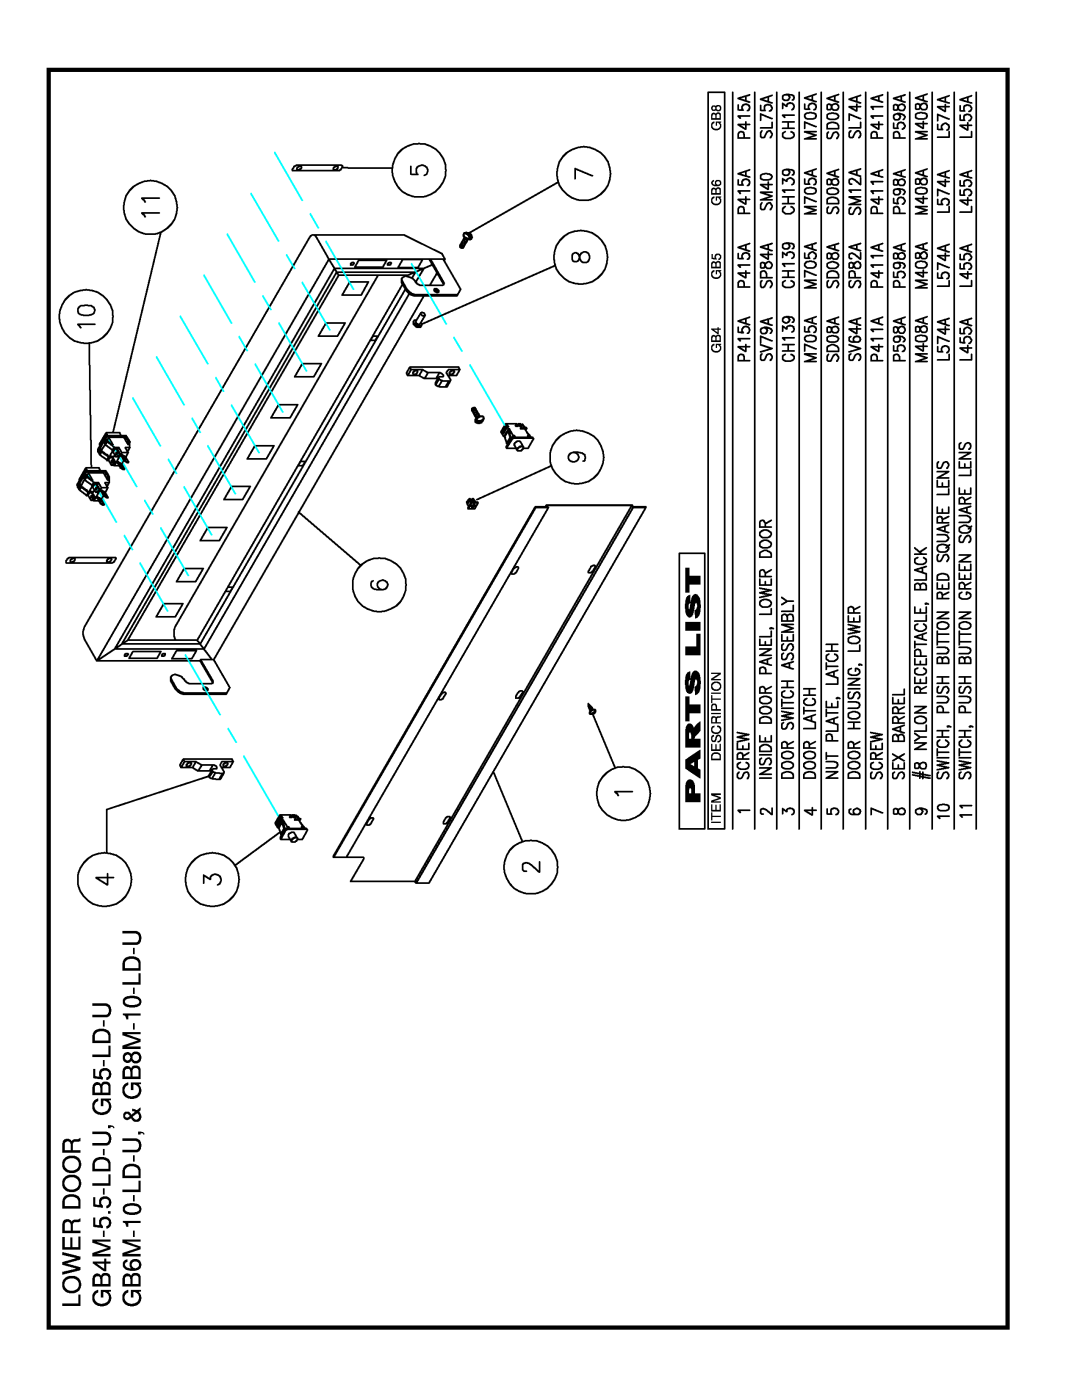 Cecilware operation manual LOWER DOOR GB4M-5.5-LD-U, GB5-LD-U, GB6M-10-LD-U,& GB8M-10-LD-U, Description 